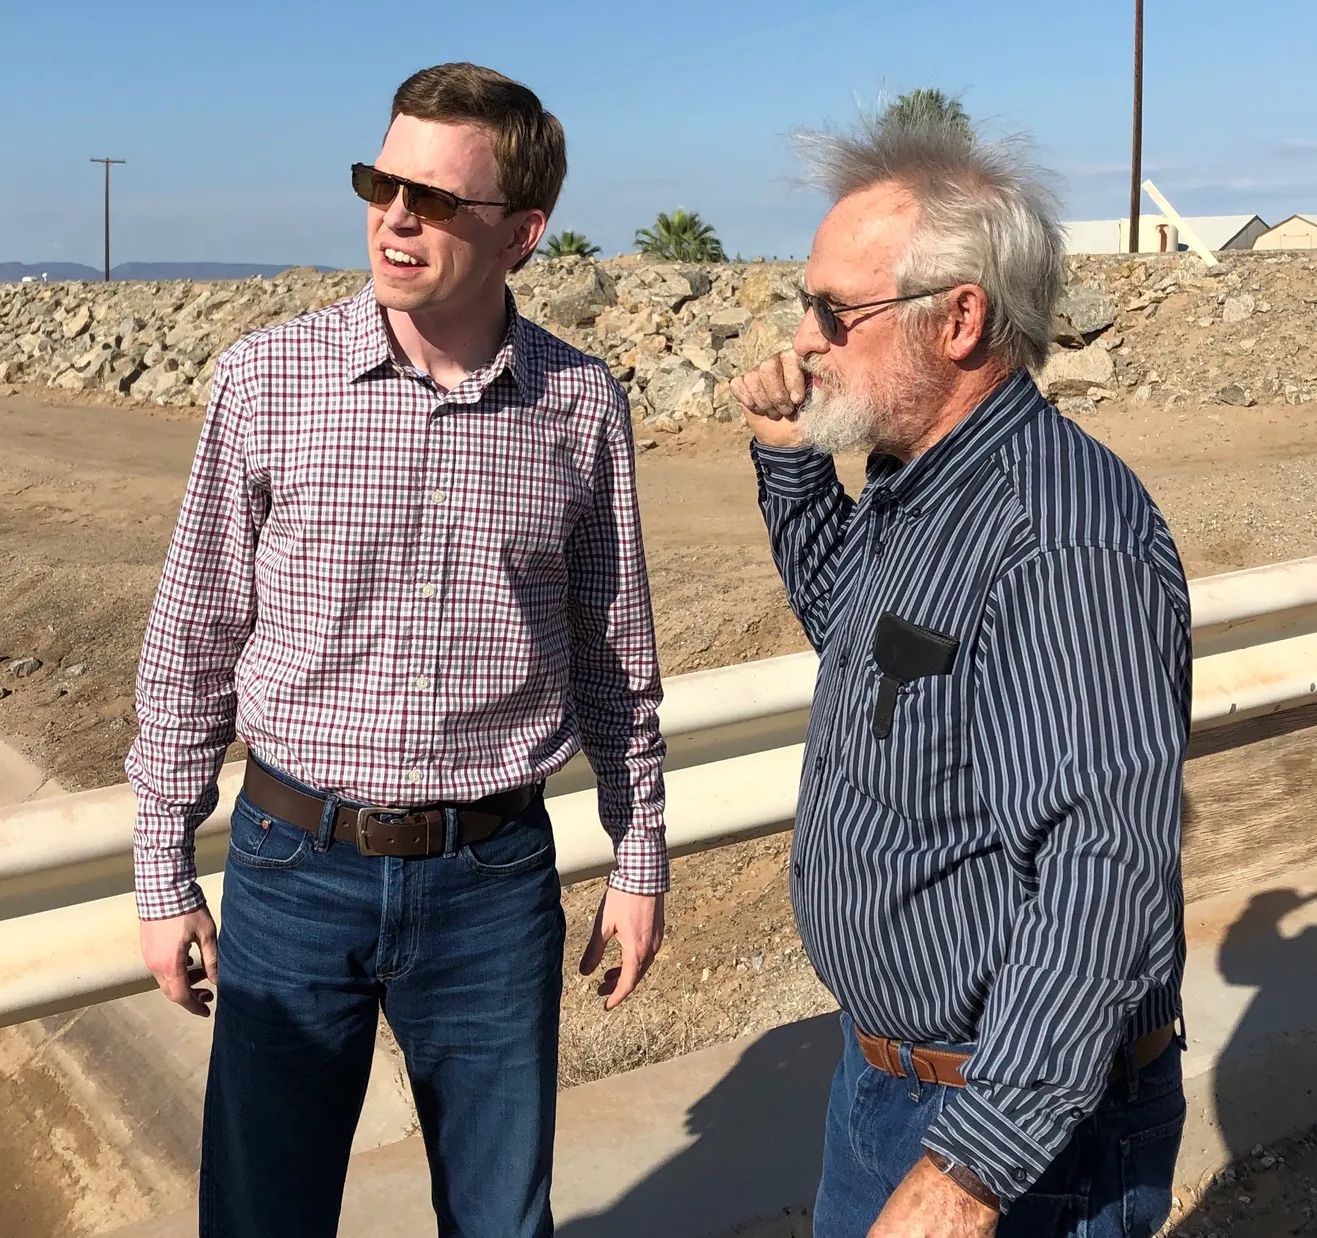 Rep. Dusty Johnson talks to a landowner near the U.S.-Mexico border.